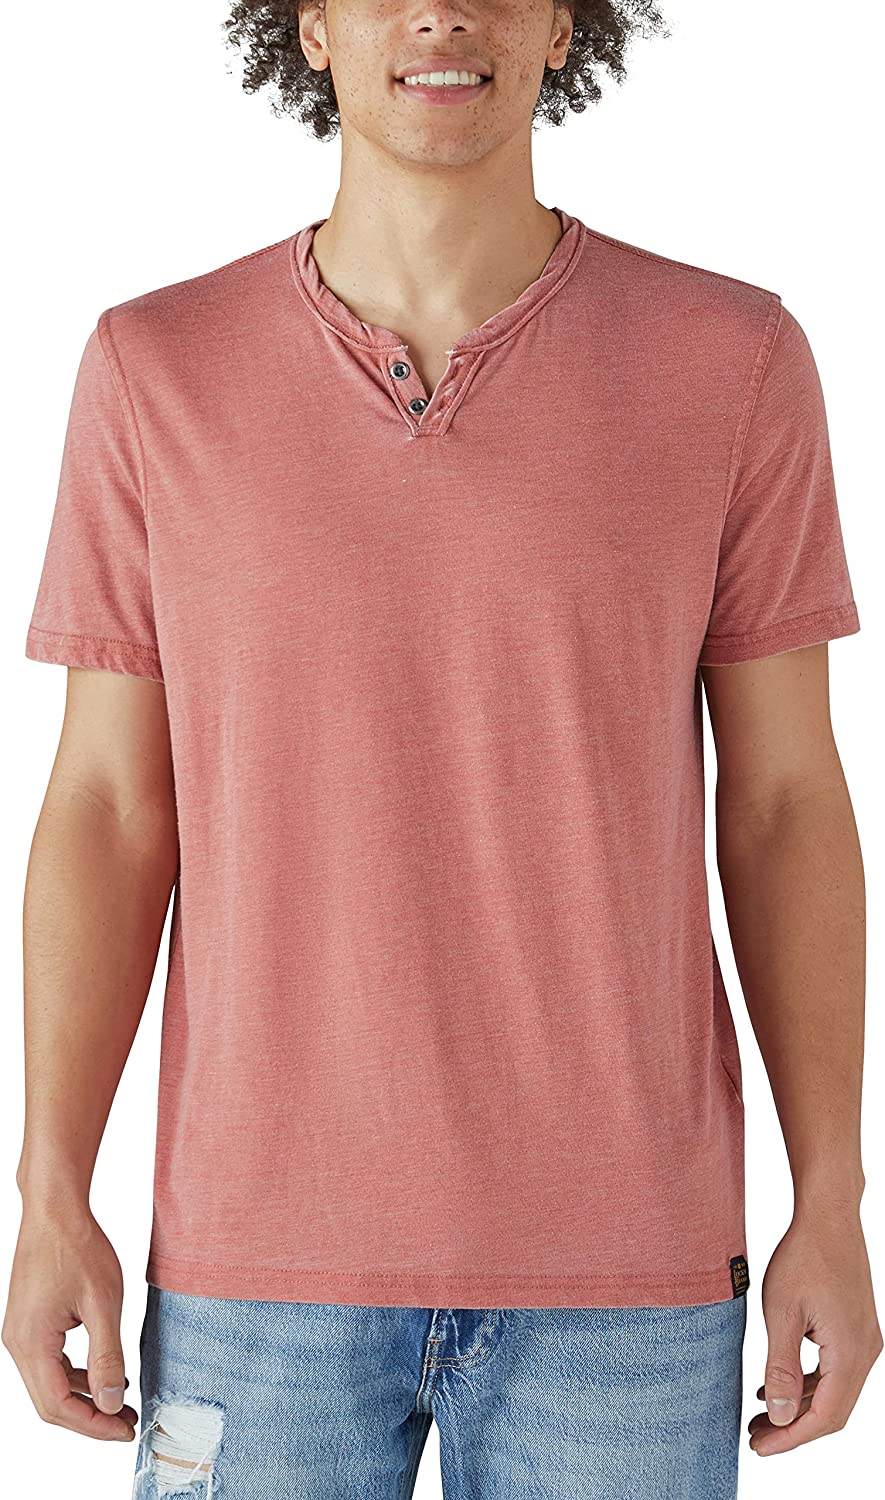 adviicd Mens Shirts Casual Tee Men's Venice Burnout Notch Neck Tee Shirt  Male Casual T-Shirt 